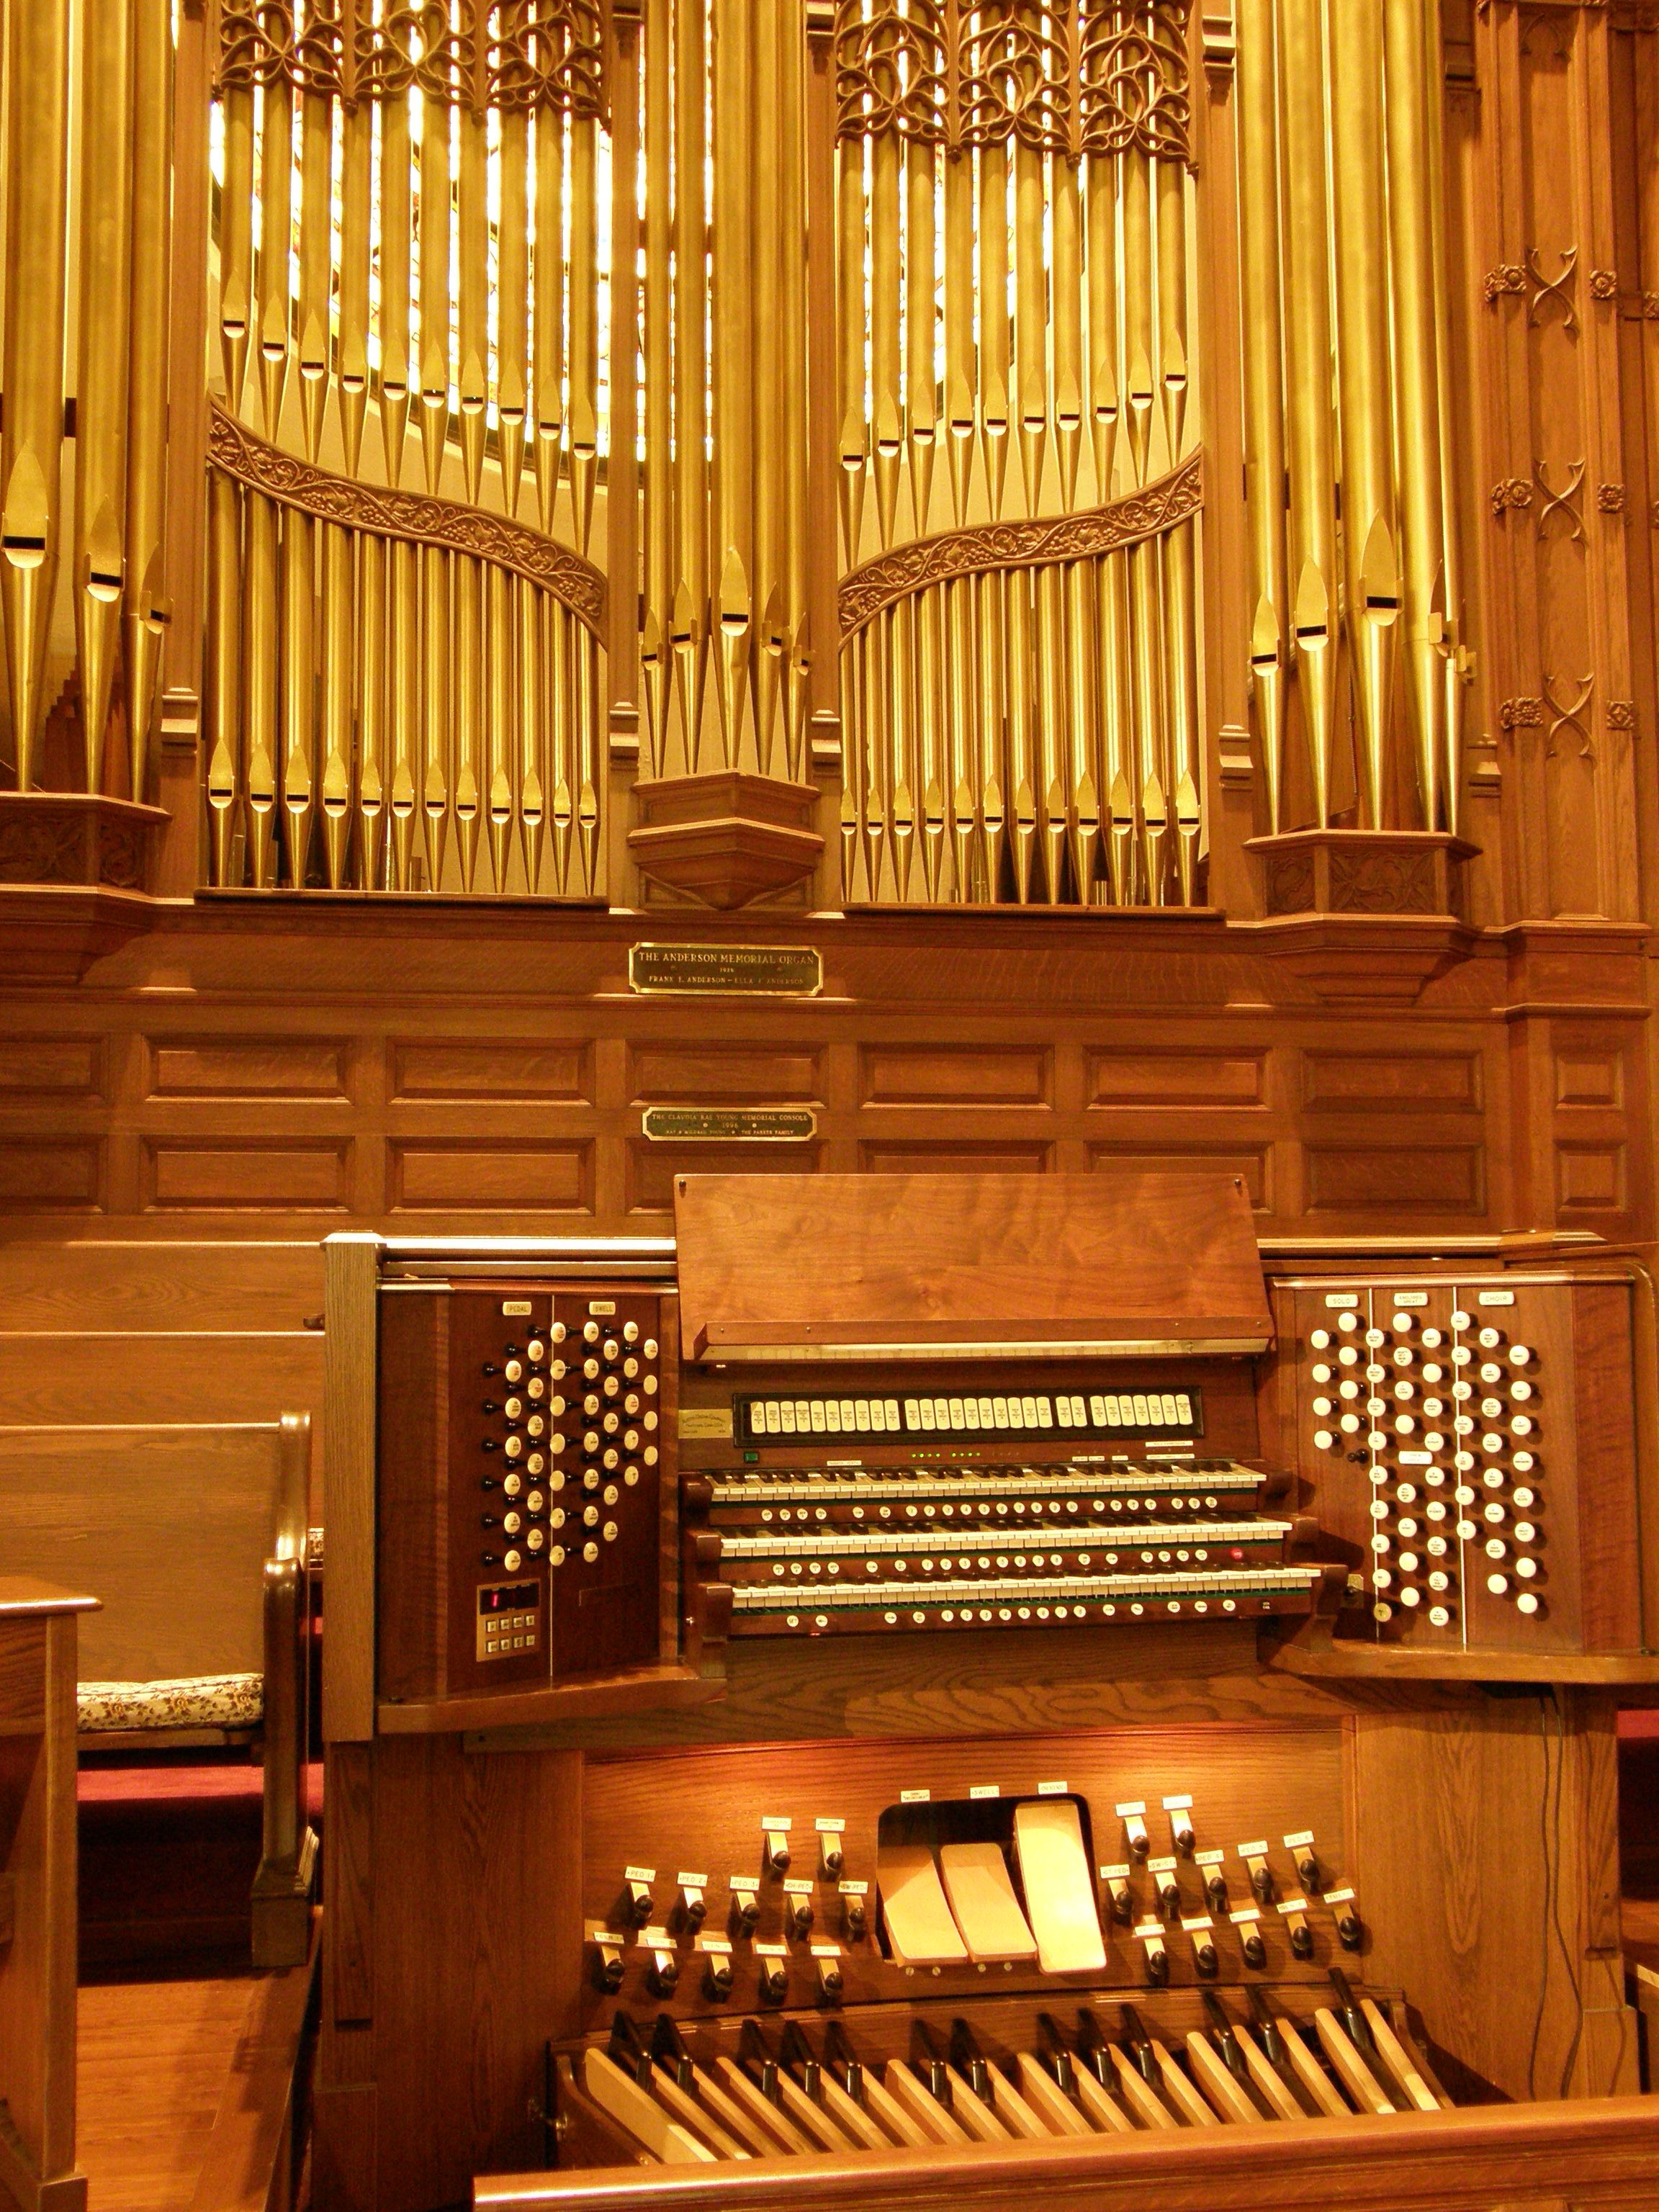 Anderson Memorial Pipe Organ | Woodworking | Pinterest | Pipes ...